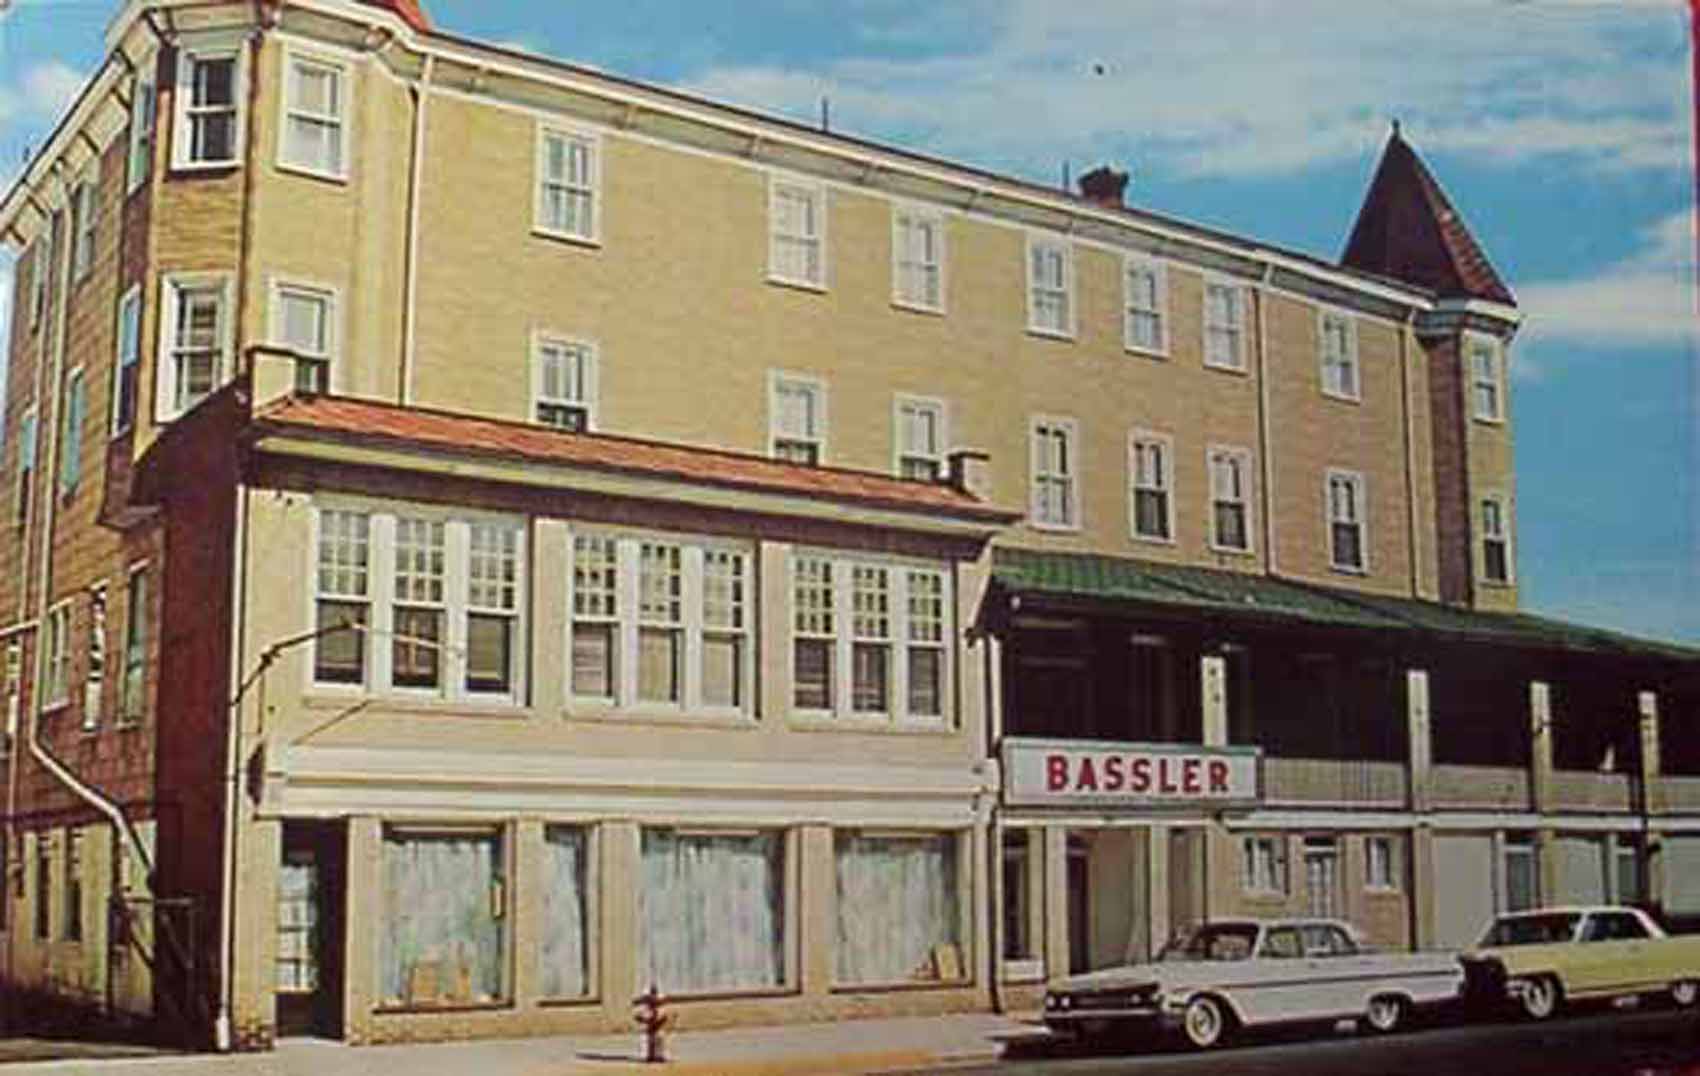 Atlantic City - Bassler Hotel - 1967